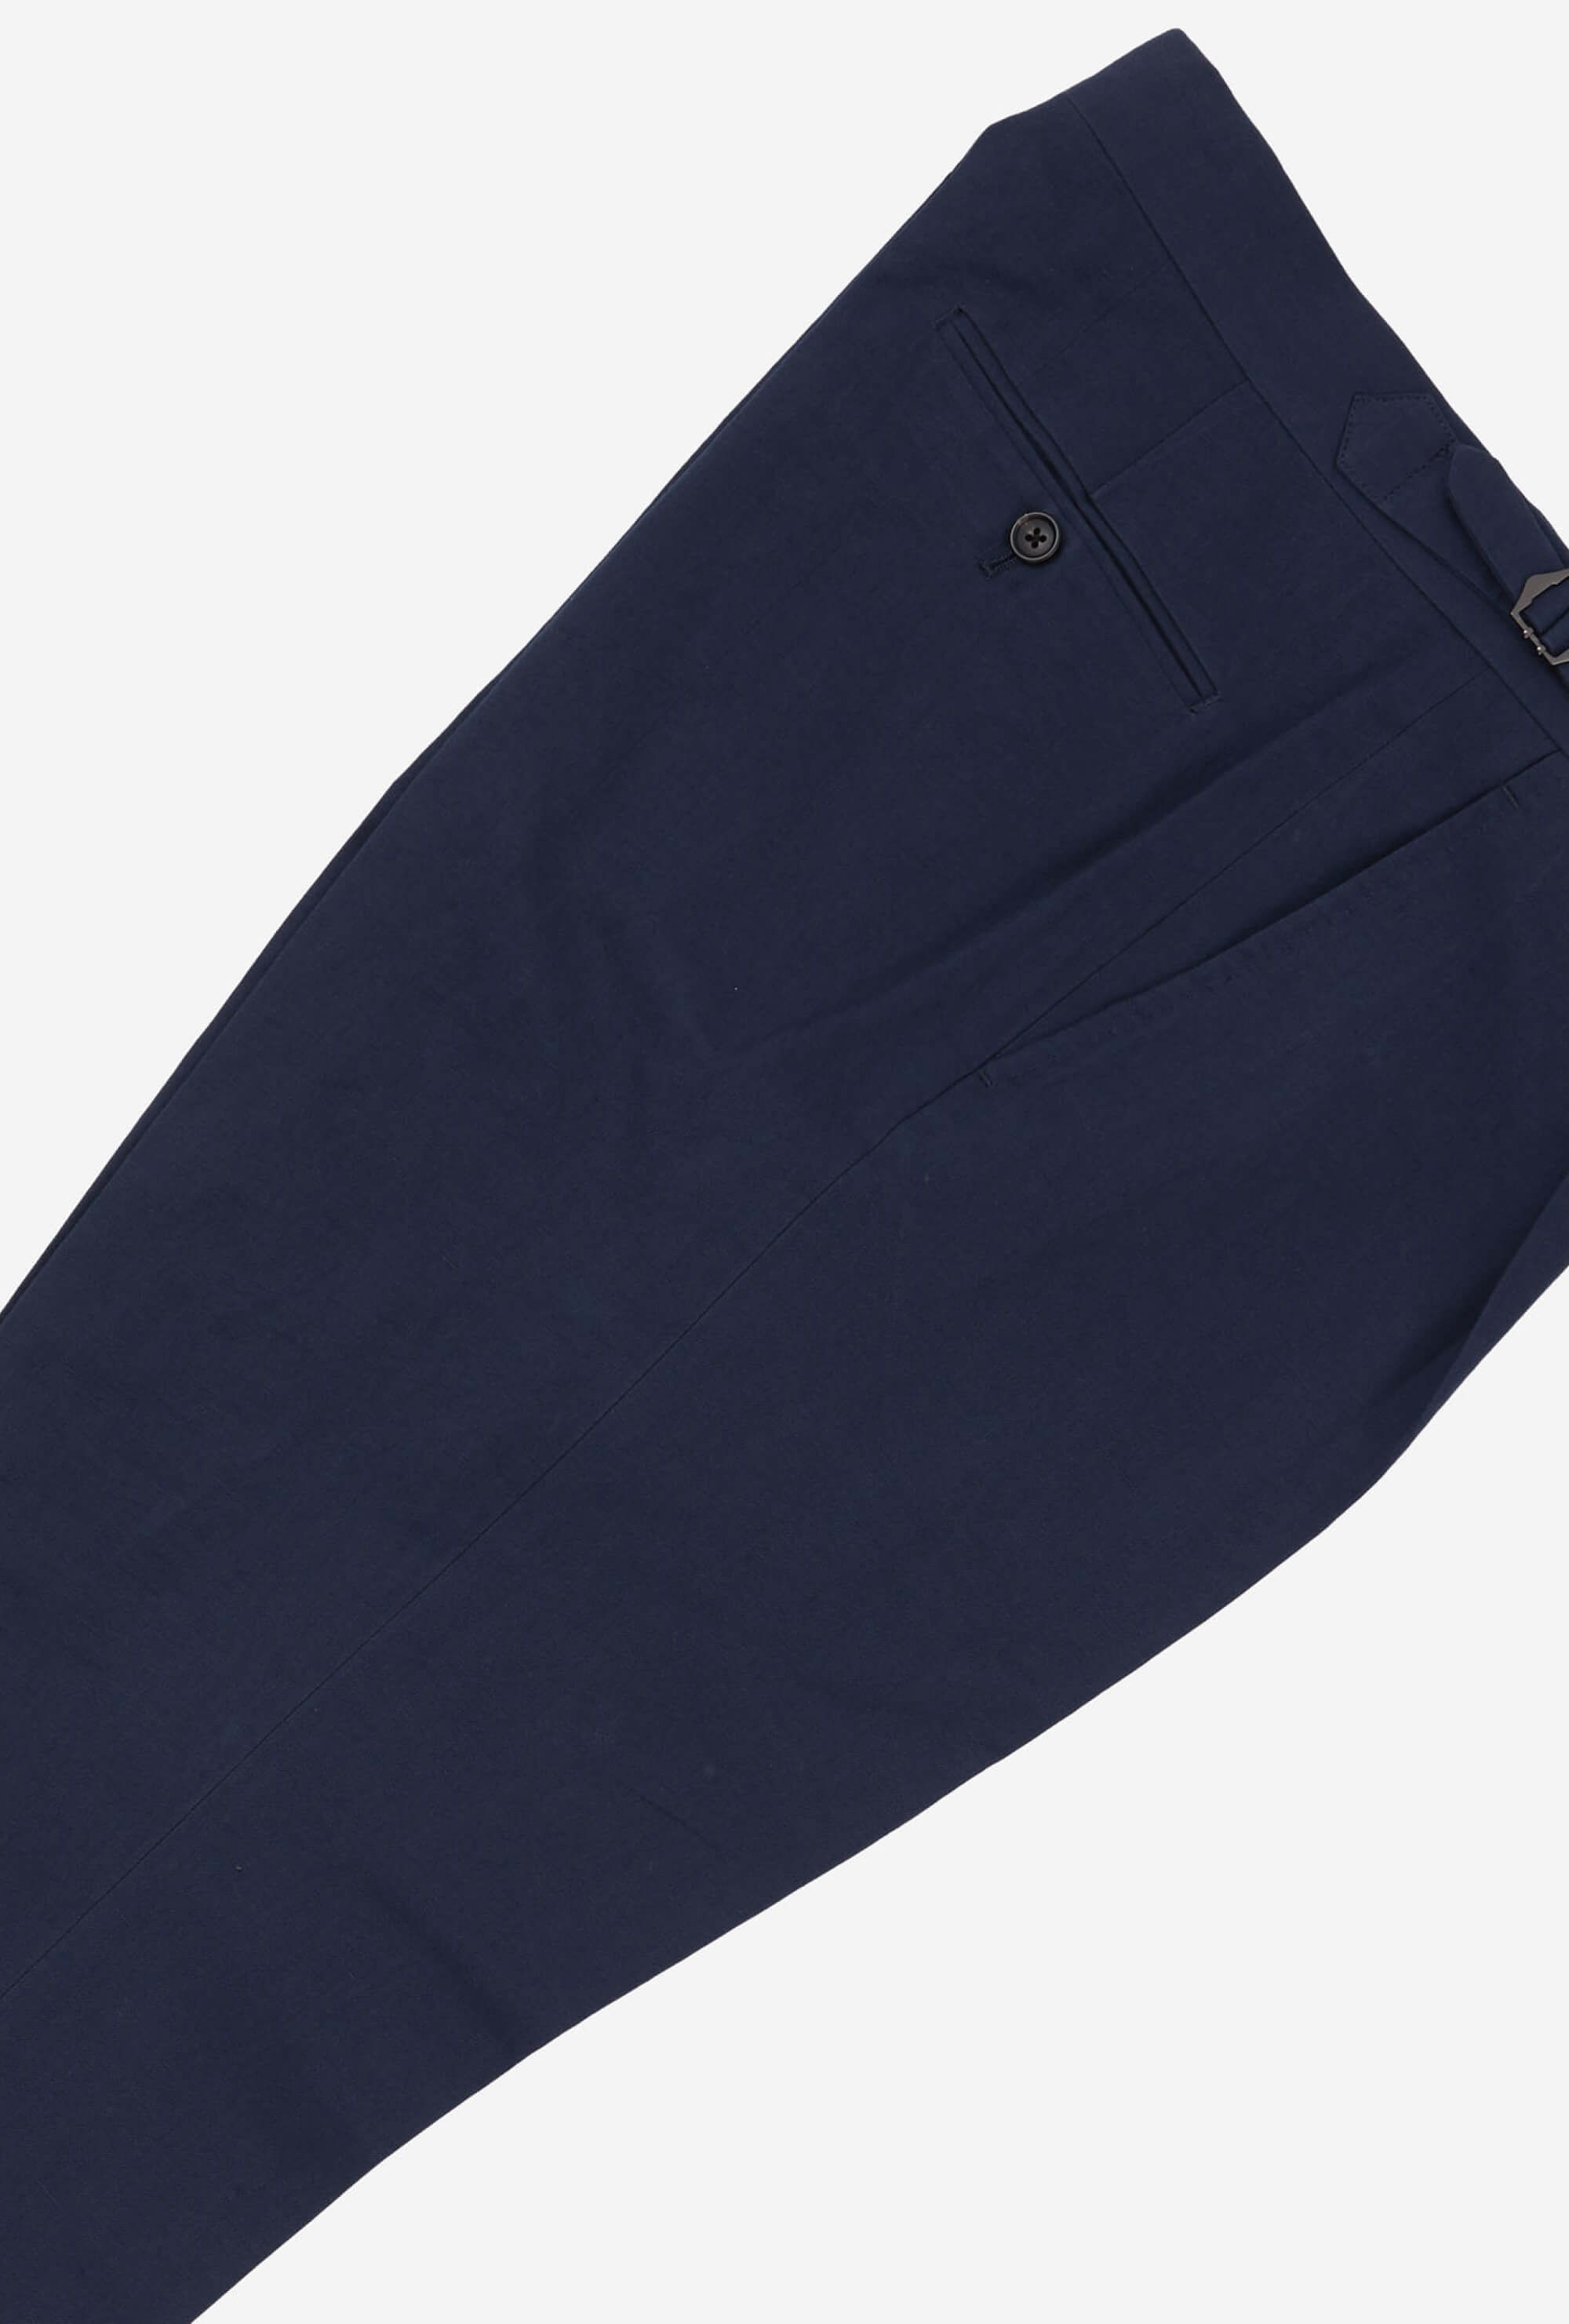 Tailored Trouser Cotton-Silk Navy